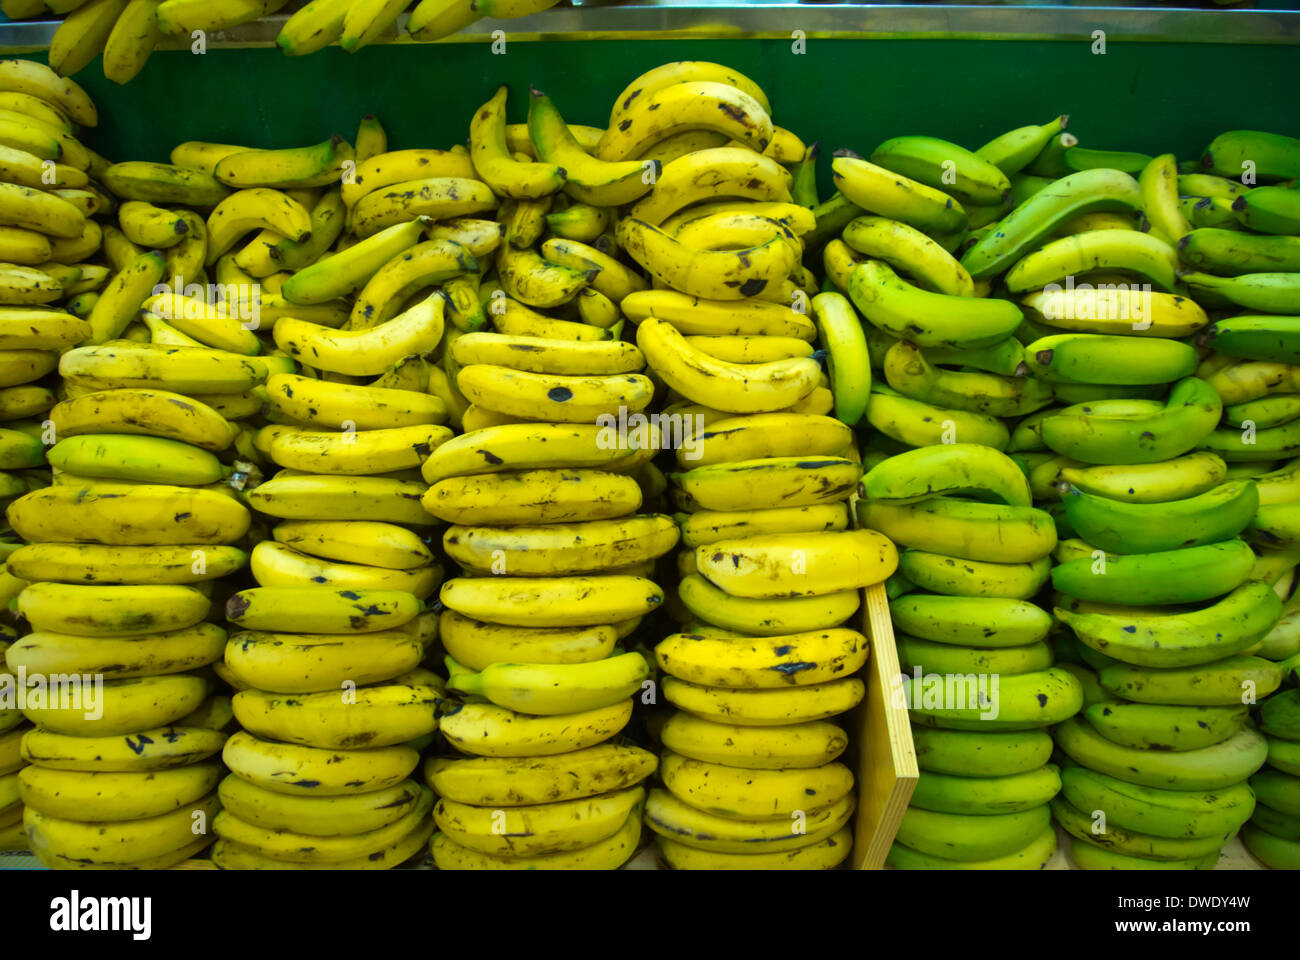 Bananas and plantains, Mercado Central market hall, Las Palmas de Gran Canaria, the Canary Islands, Spain, Europe Stock Photo